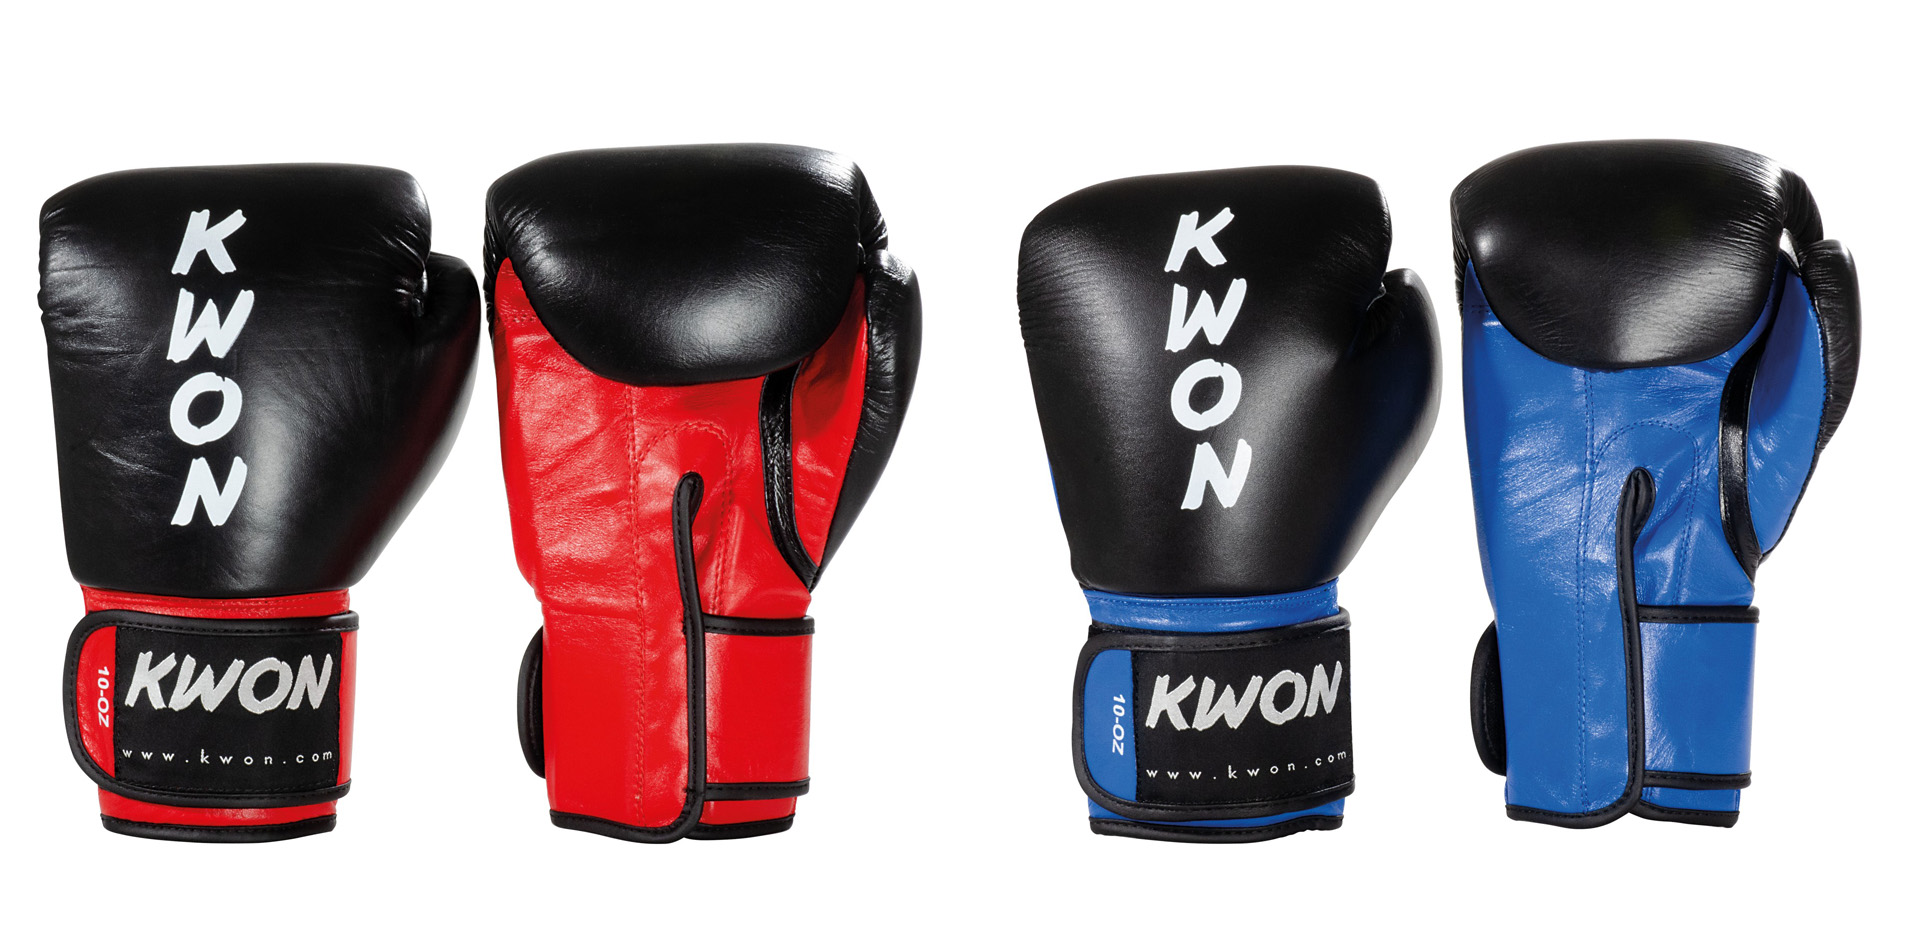 KWON Leder Kickboxhandschuhe KO Champ | Boxhandschuhe Kickboxen - WKU  anerkannt